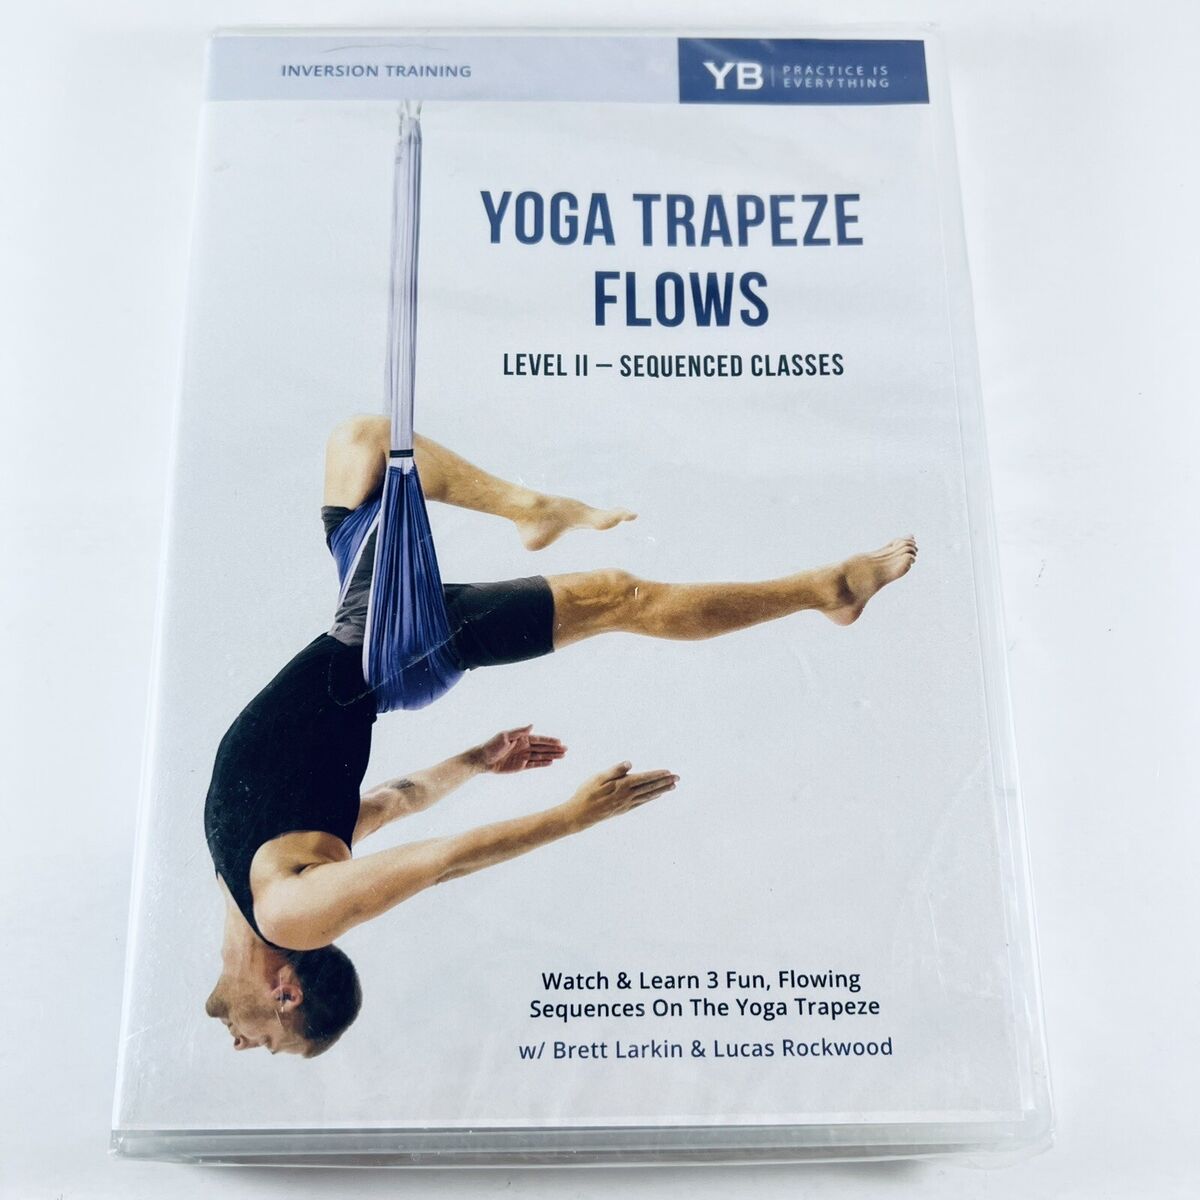 YOGABODY Yoga Trapeze Flows Level II 2 DVD - 3 Flow Sequences